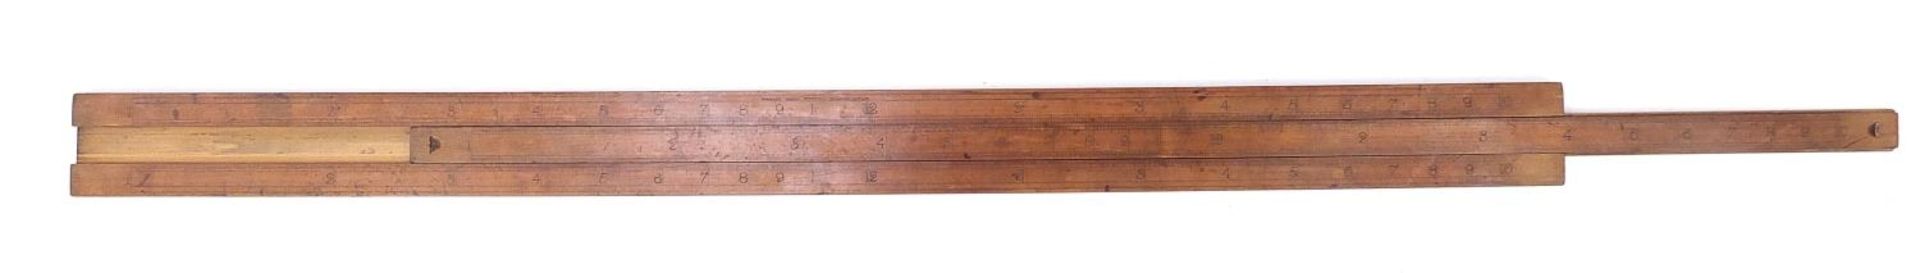 Antique Stanley boxwood three foot sliding rule impressed Stanley Great Turnstile Holborn London, - Image 3 of 14